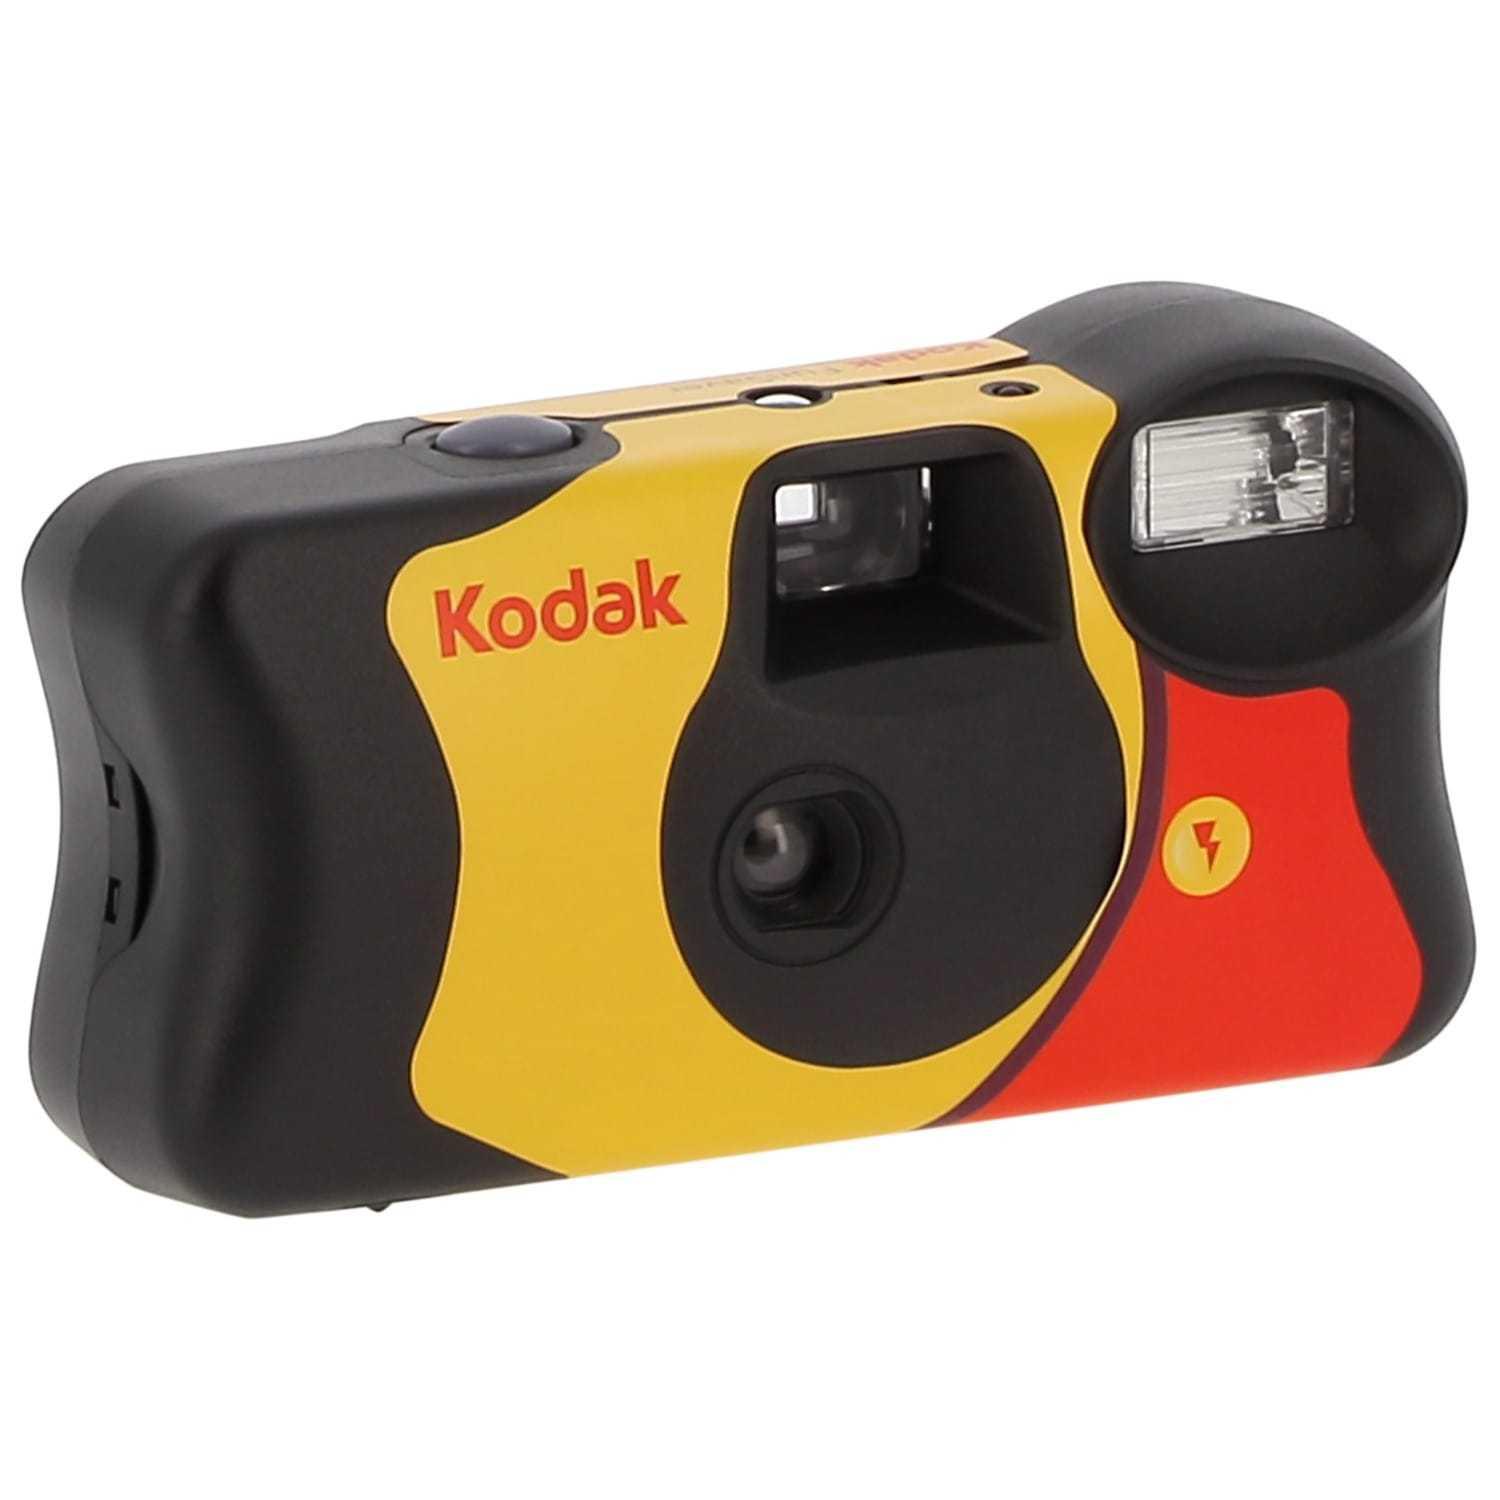 Kodak Fun Saver 27 + 12 poses, ISO 800